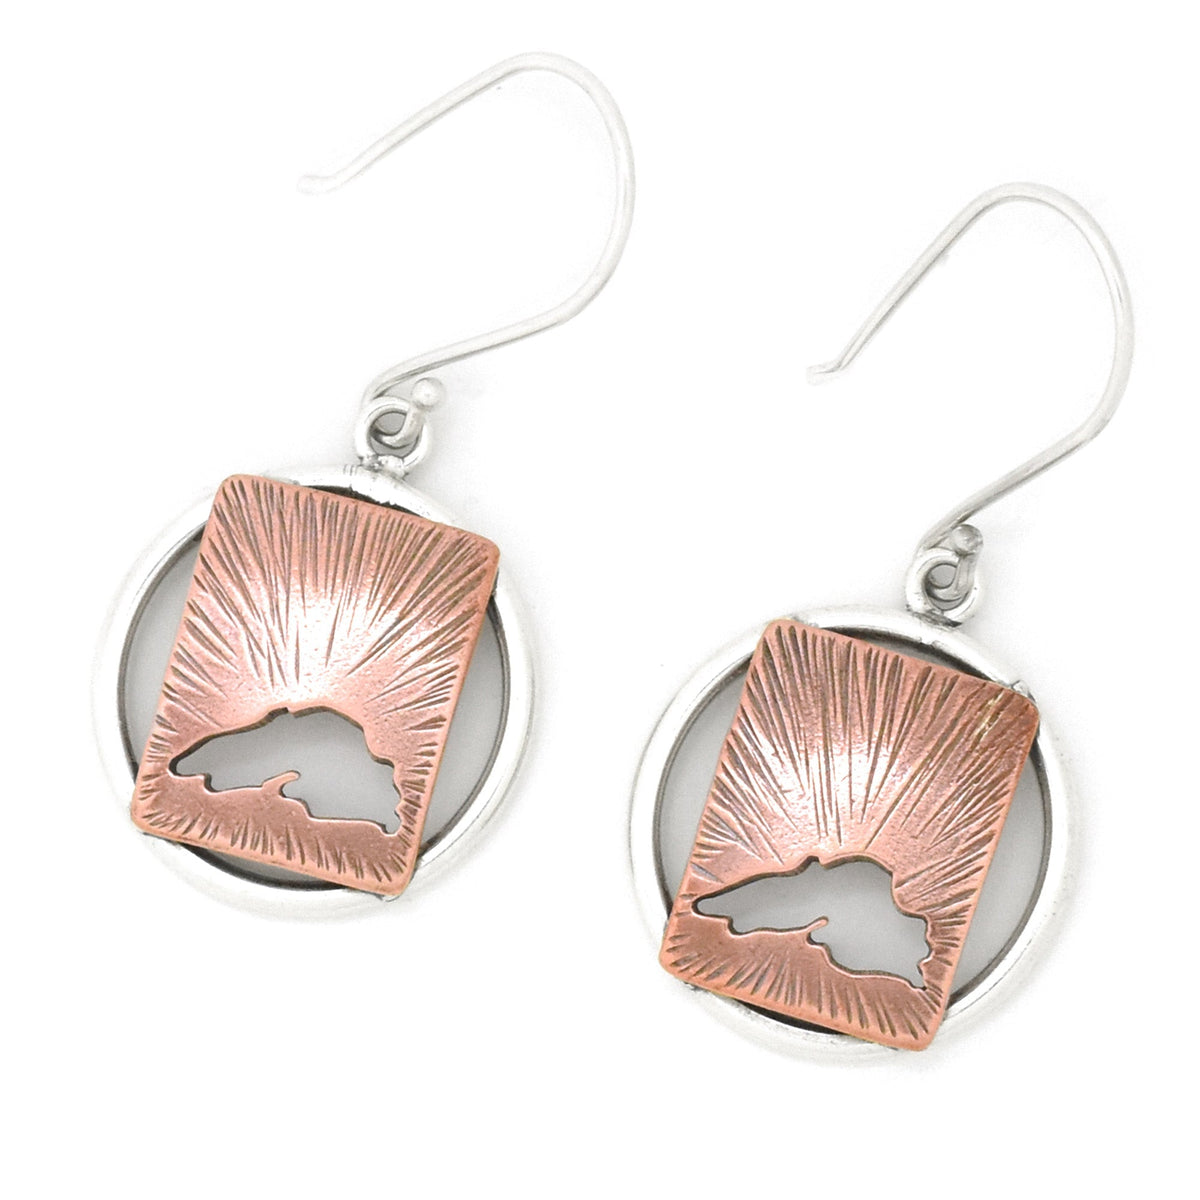 Radial Copper Lake Superior Earrings - Mixed Metal Earrings   7092 - handmade by Beth Millner Jewelry